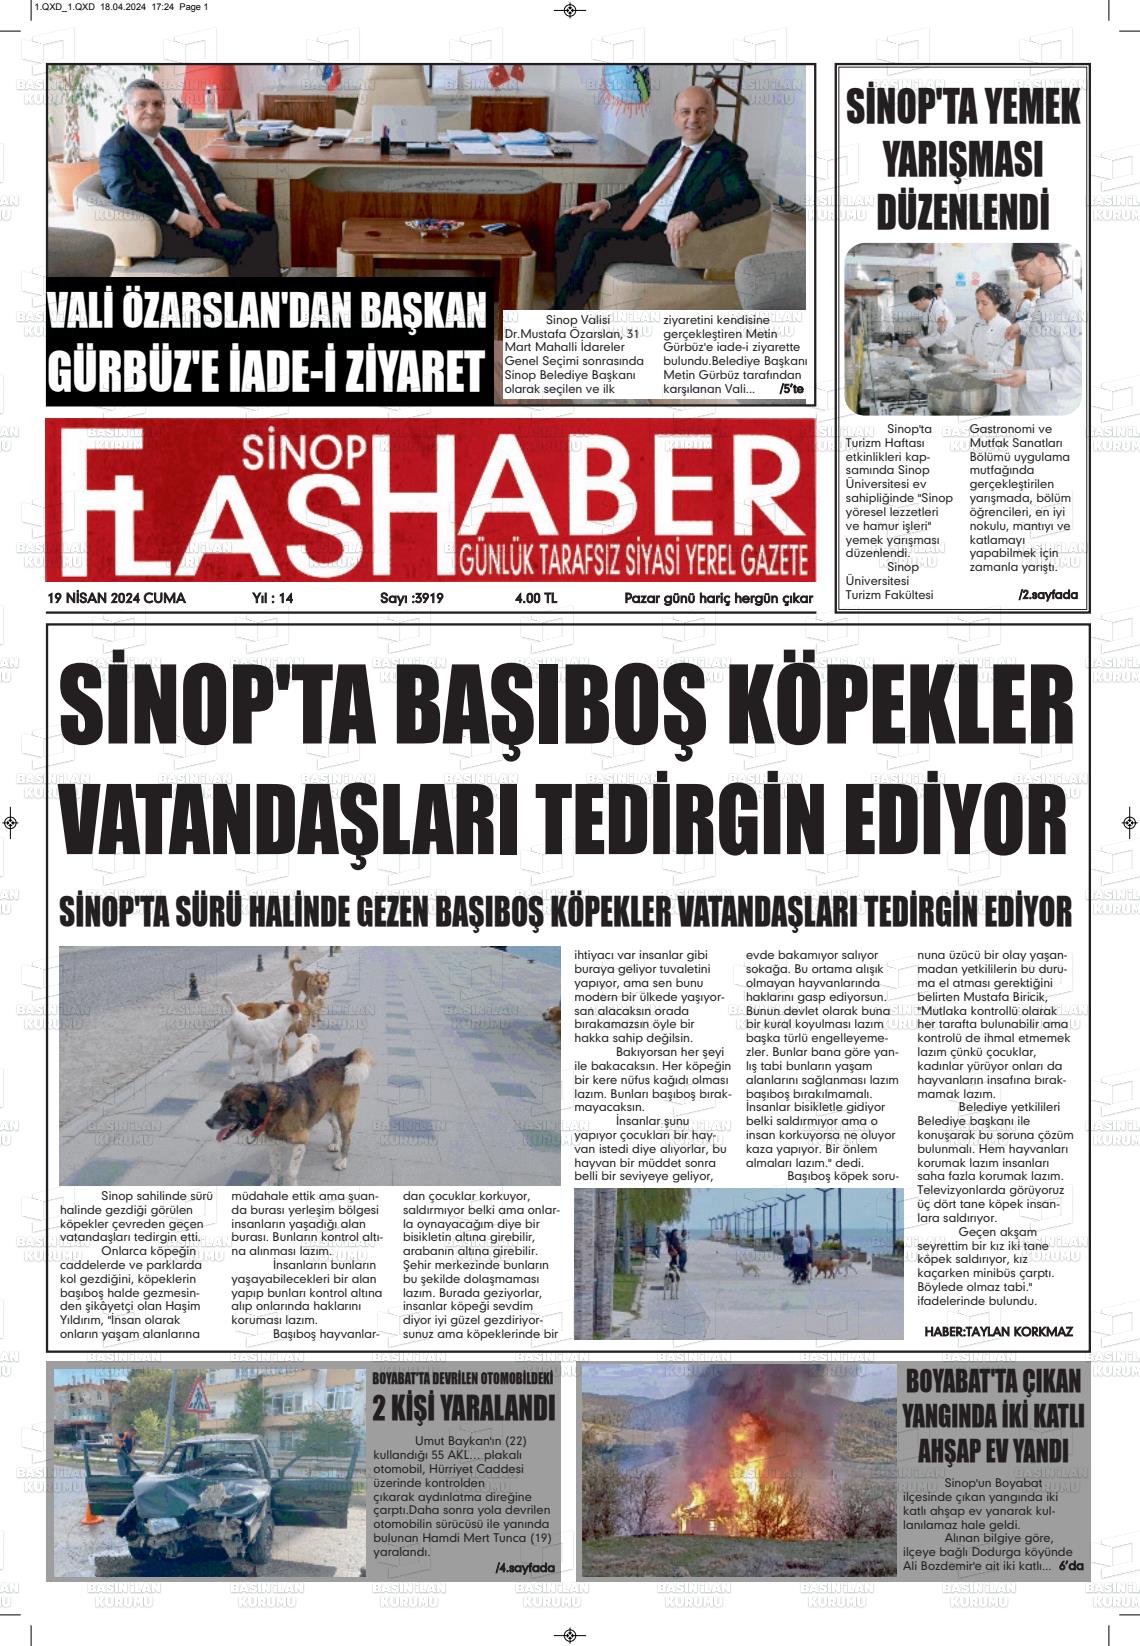 19 Nisan 2024 Sinop Flaş Haber Gazete Manşeti